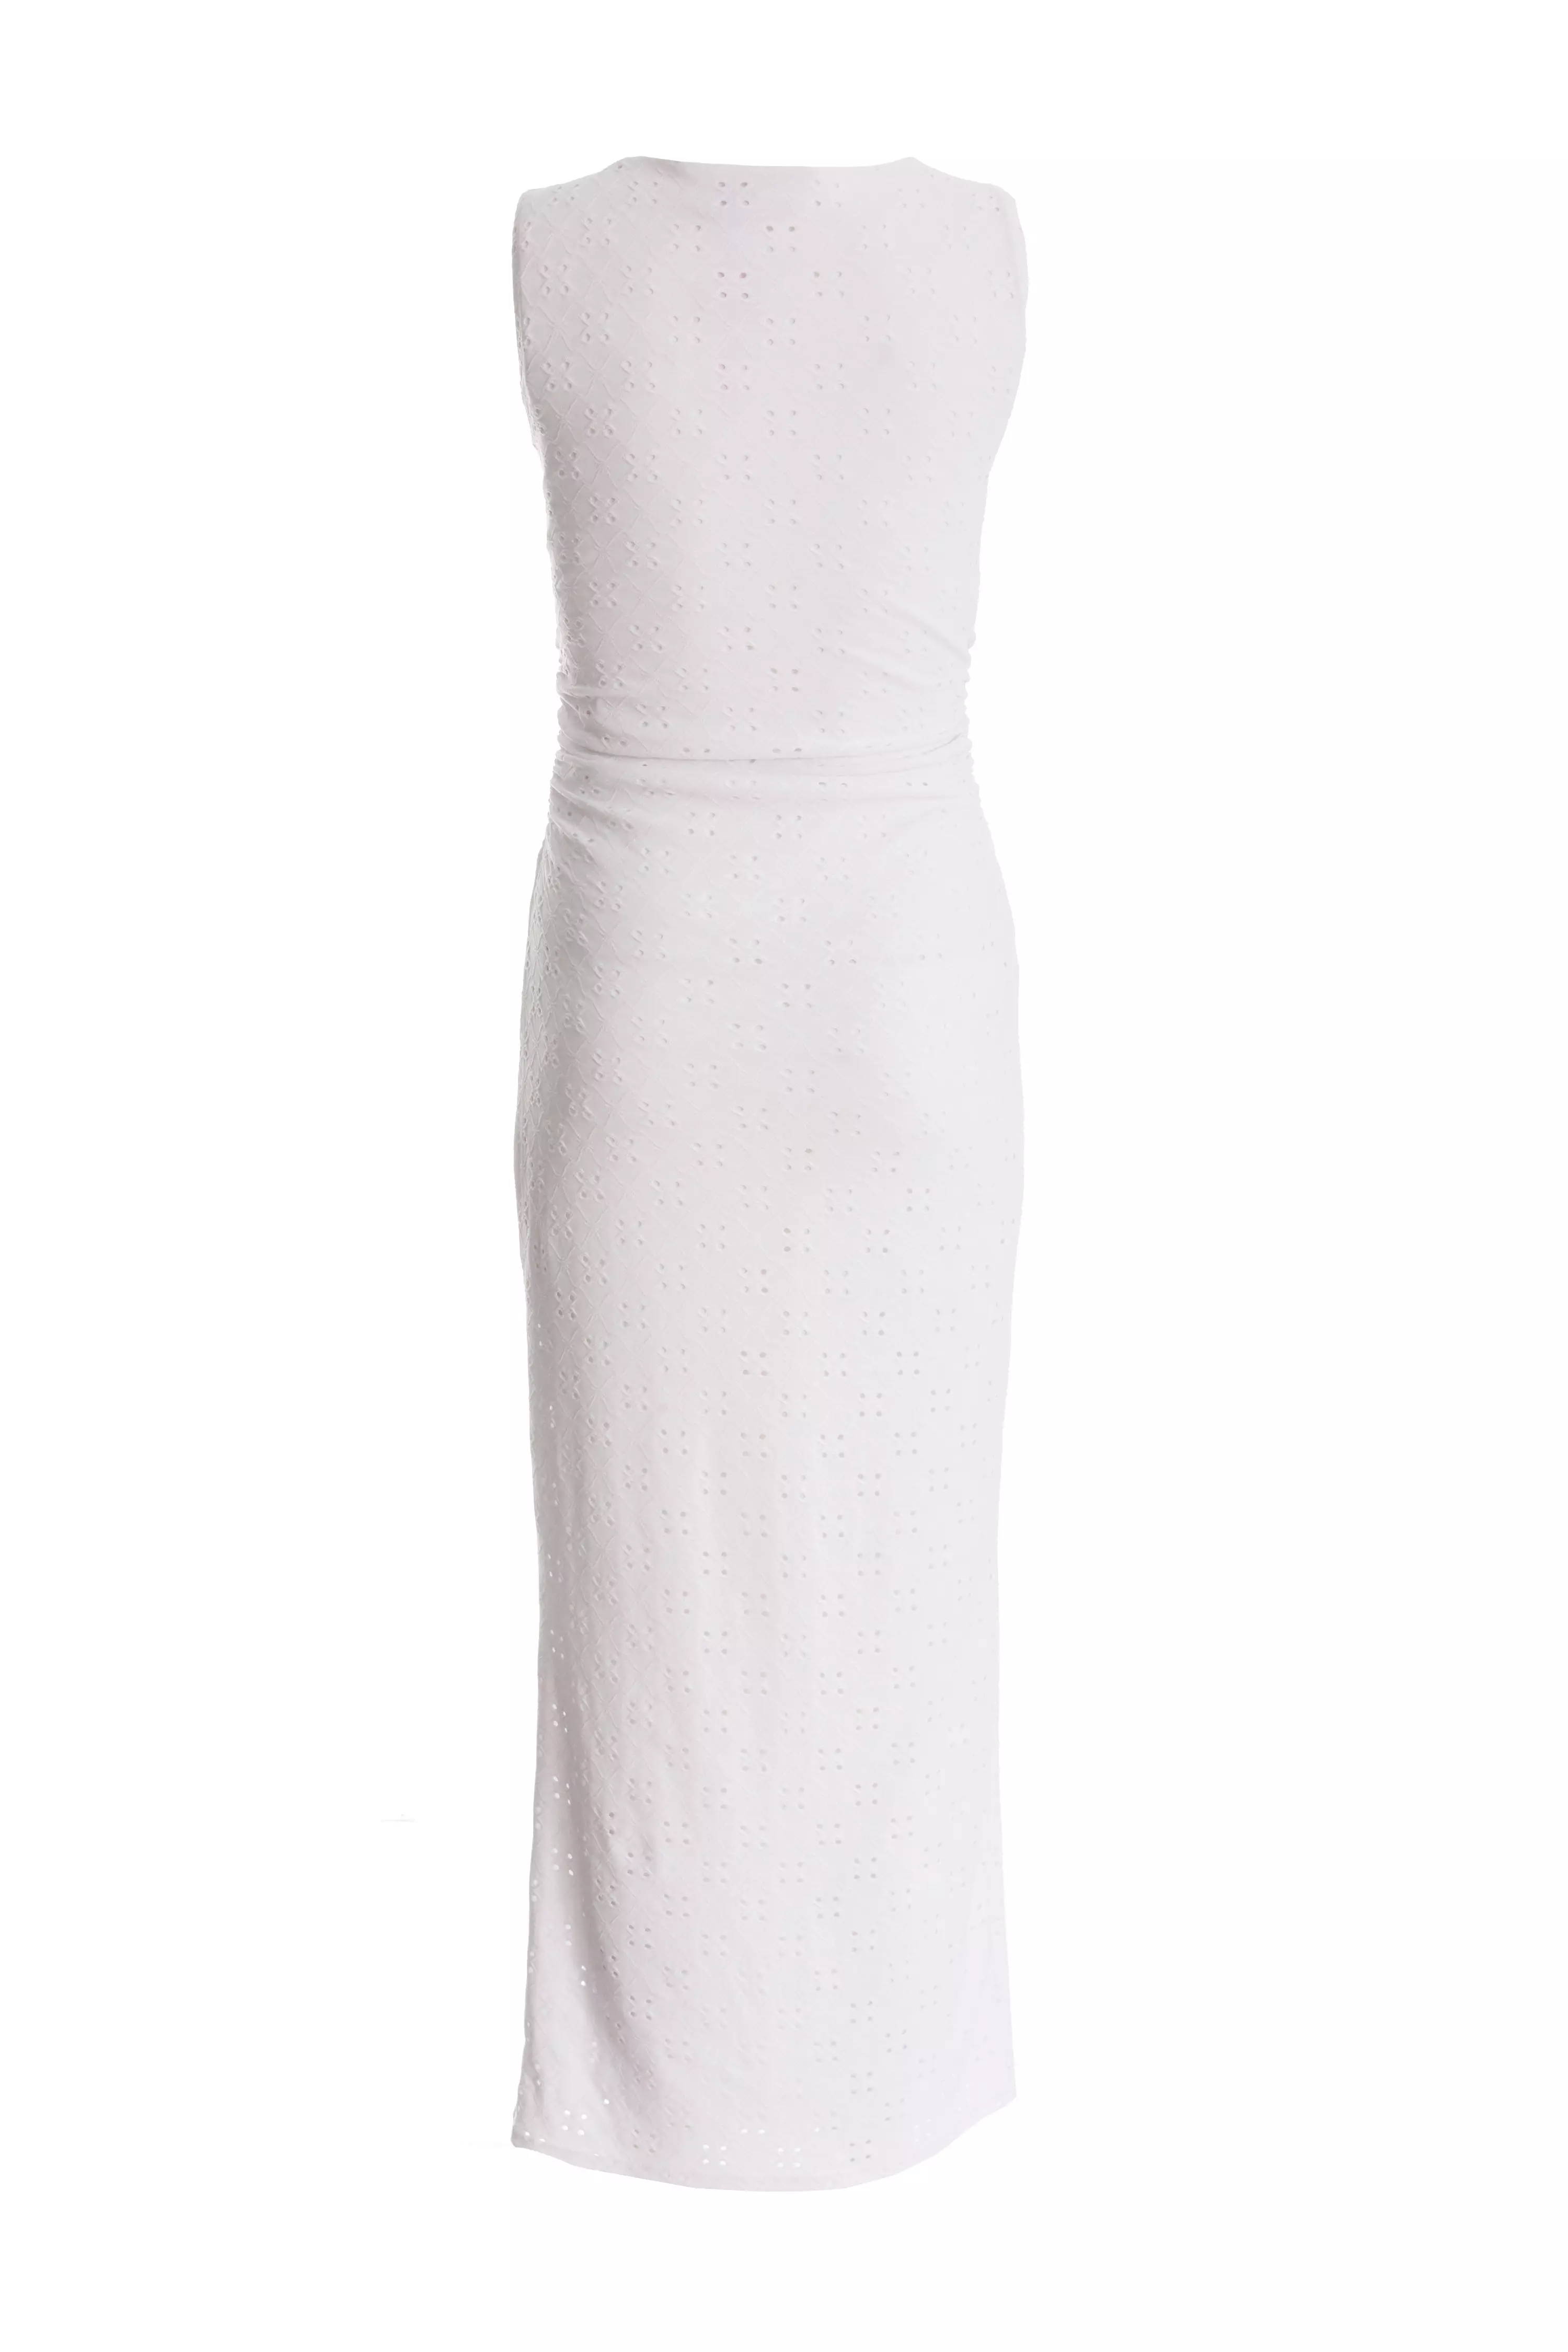 White Embroidered Bodycon Midaxi Dress